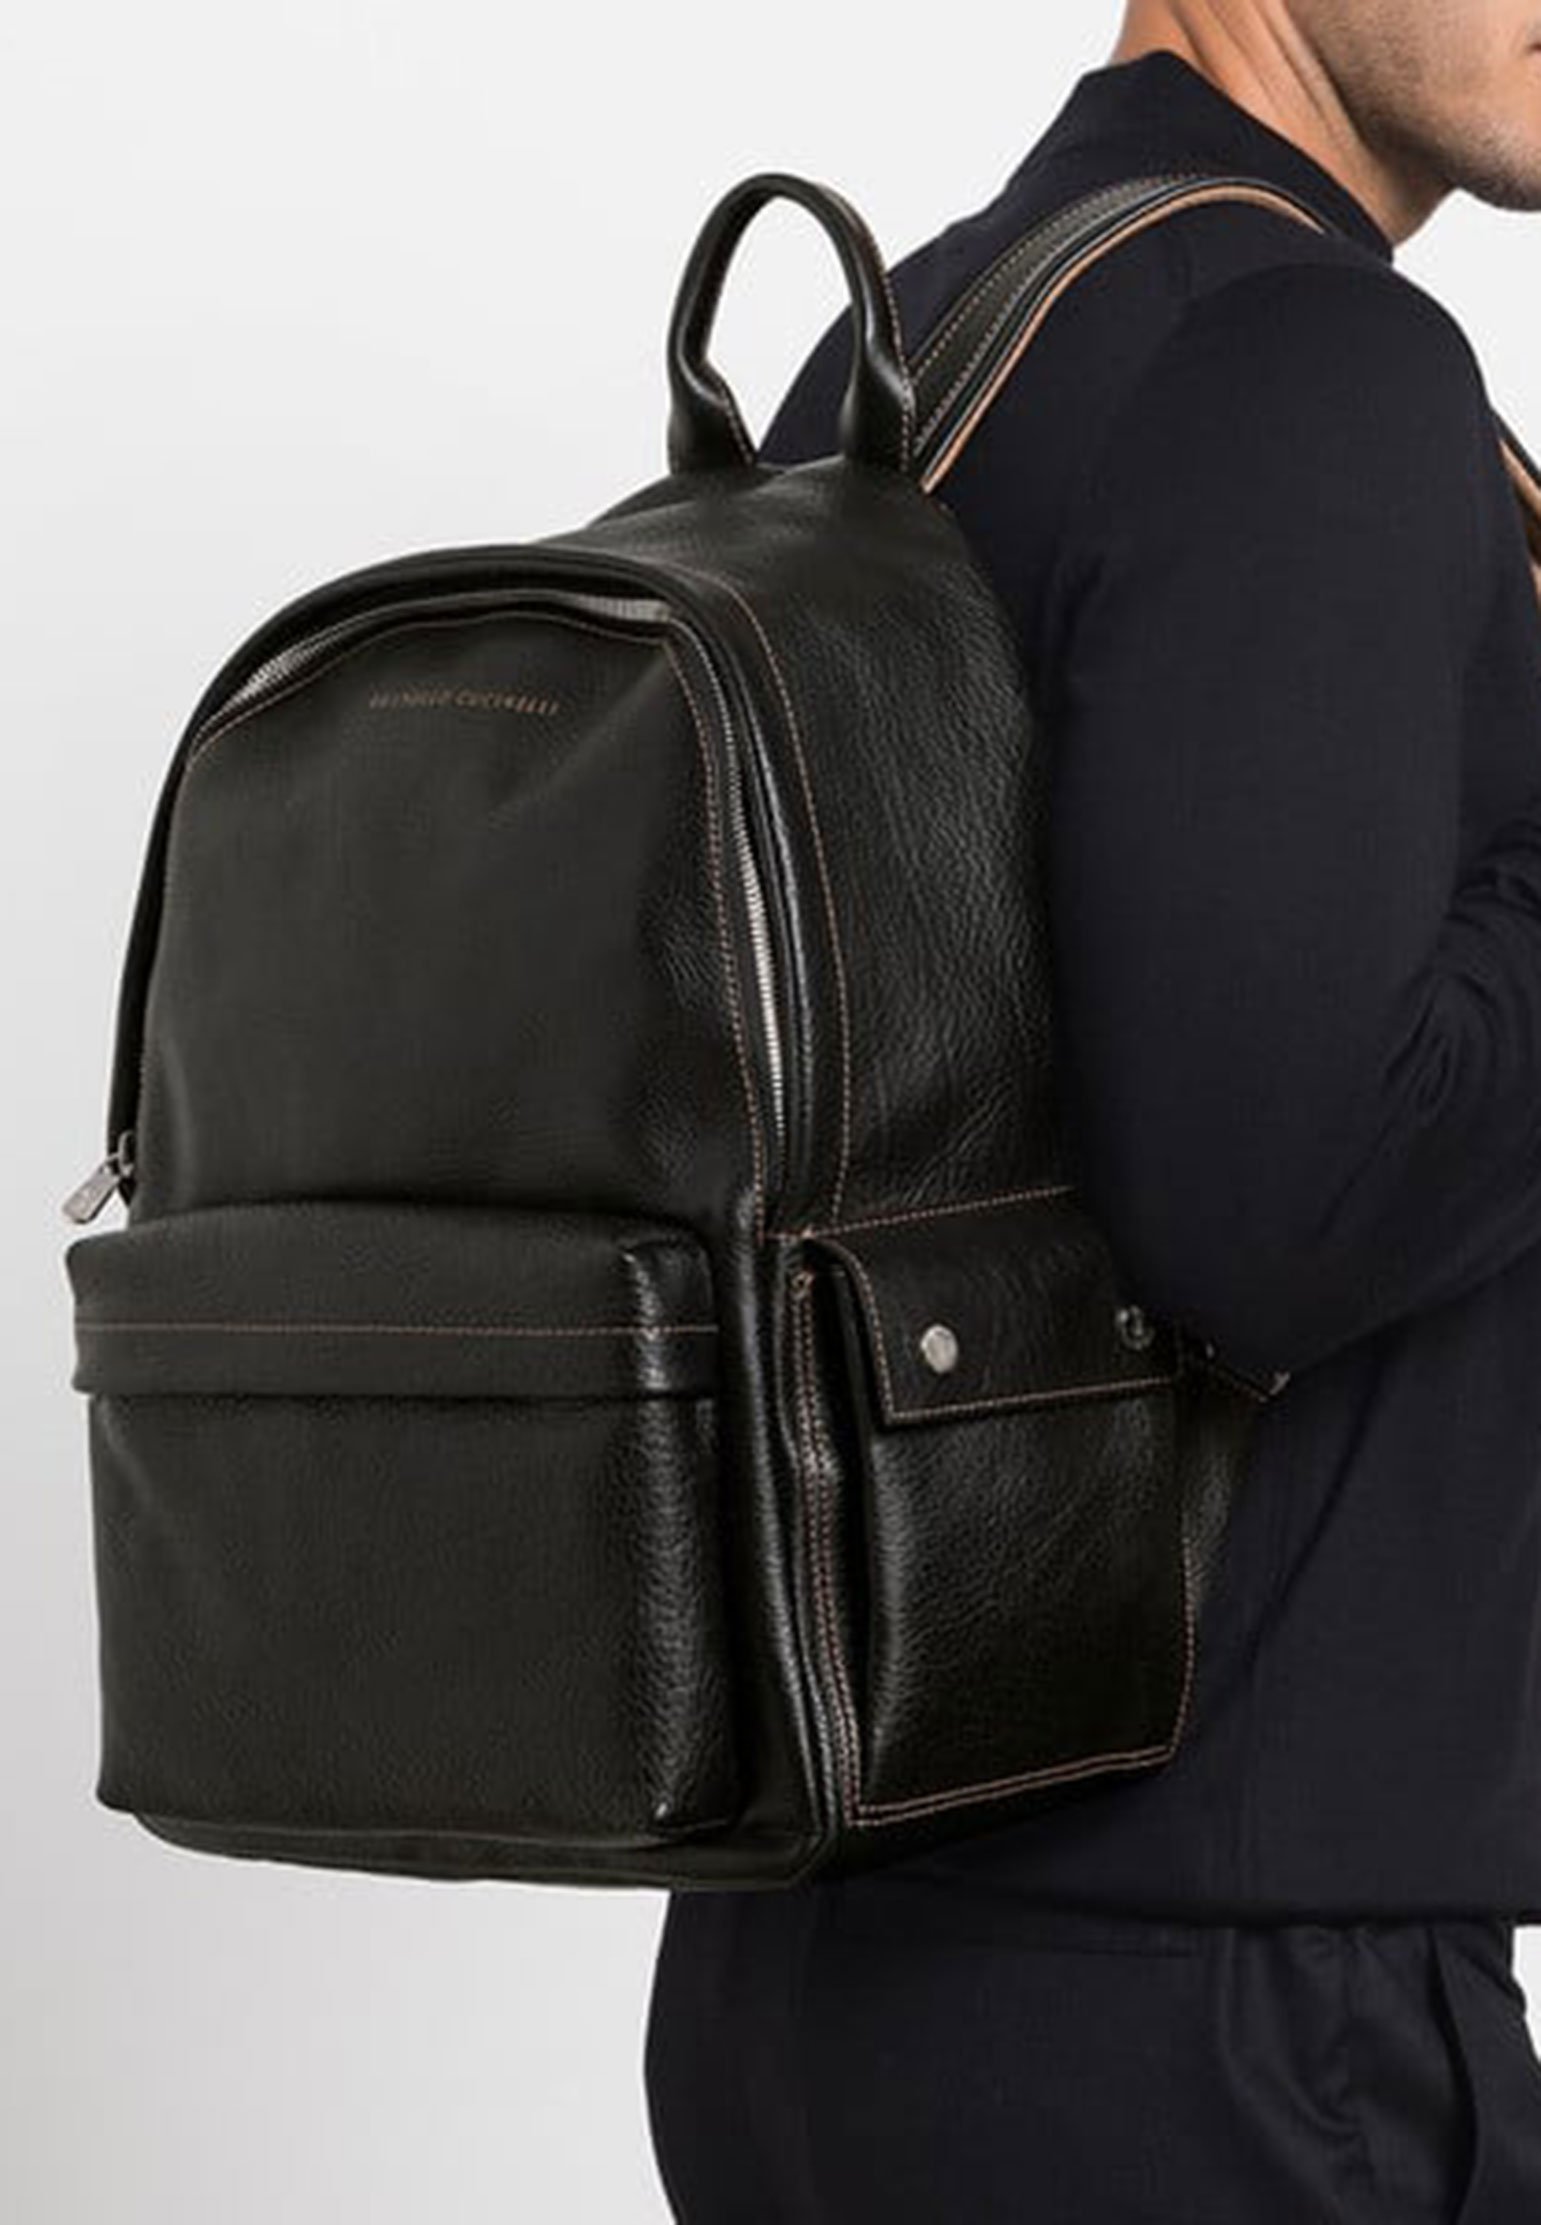 Bag BRUNELLO CUCINELLI Color: black (Code: 2496) in online store Allure